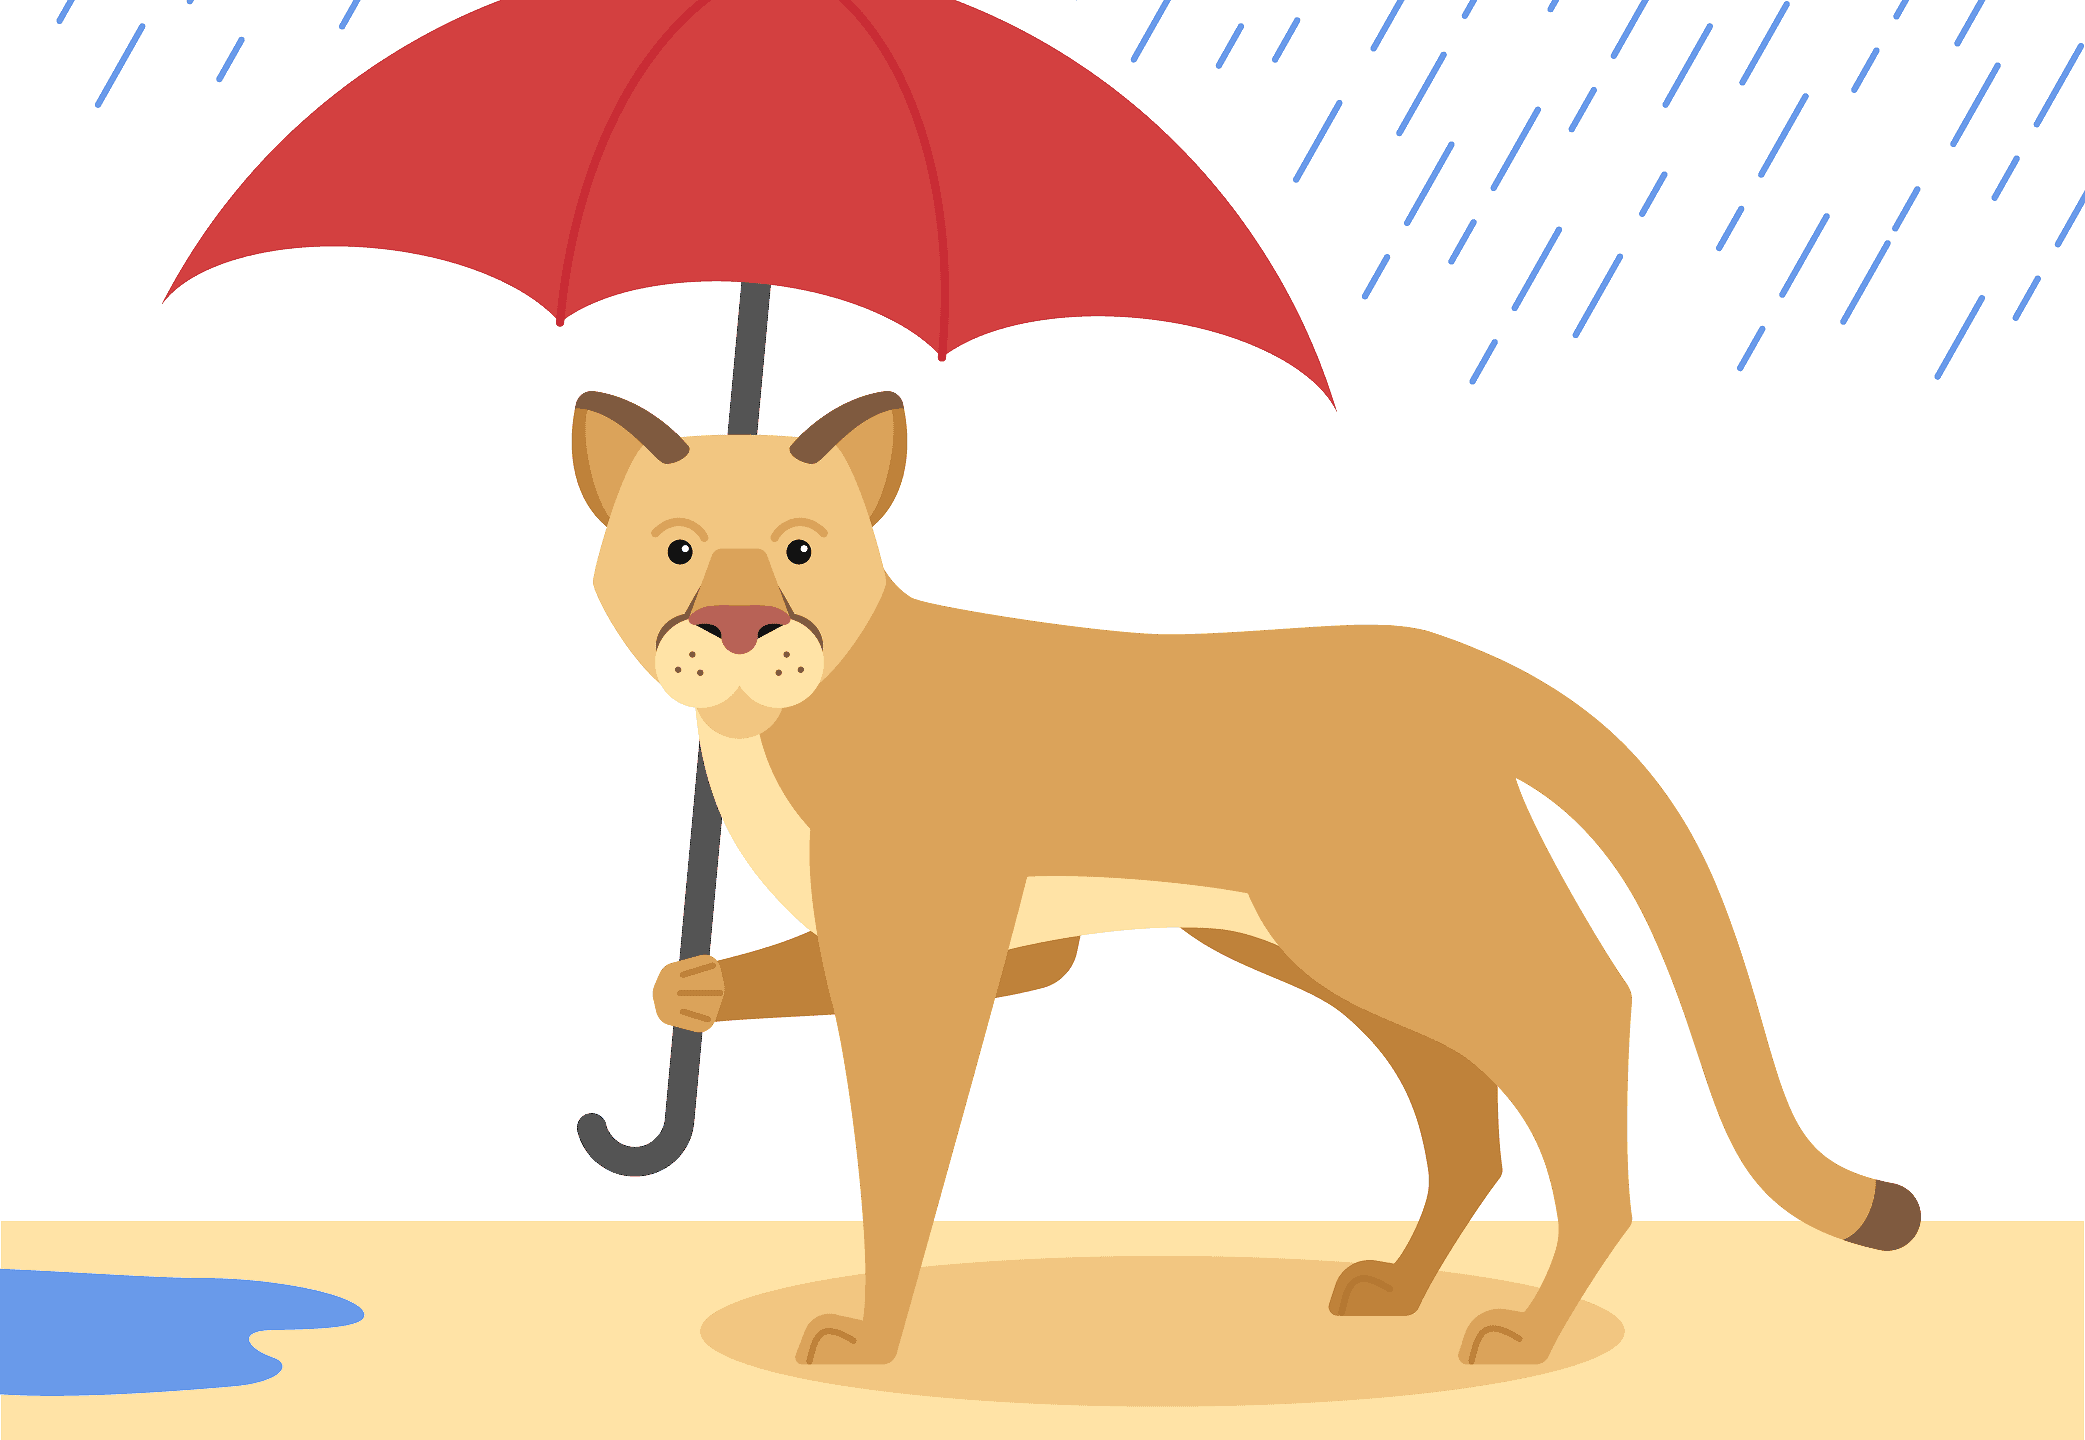 An illustrated animal holding an umbrella